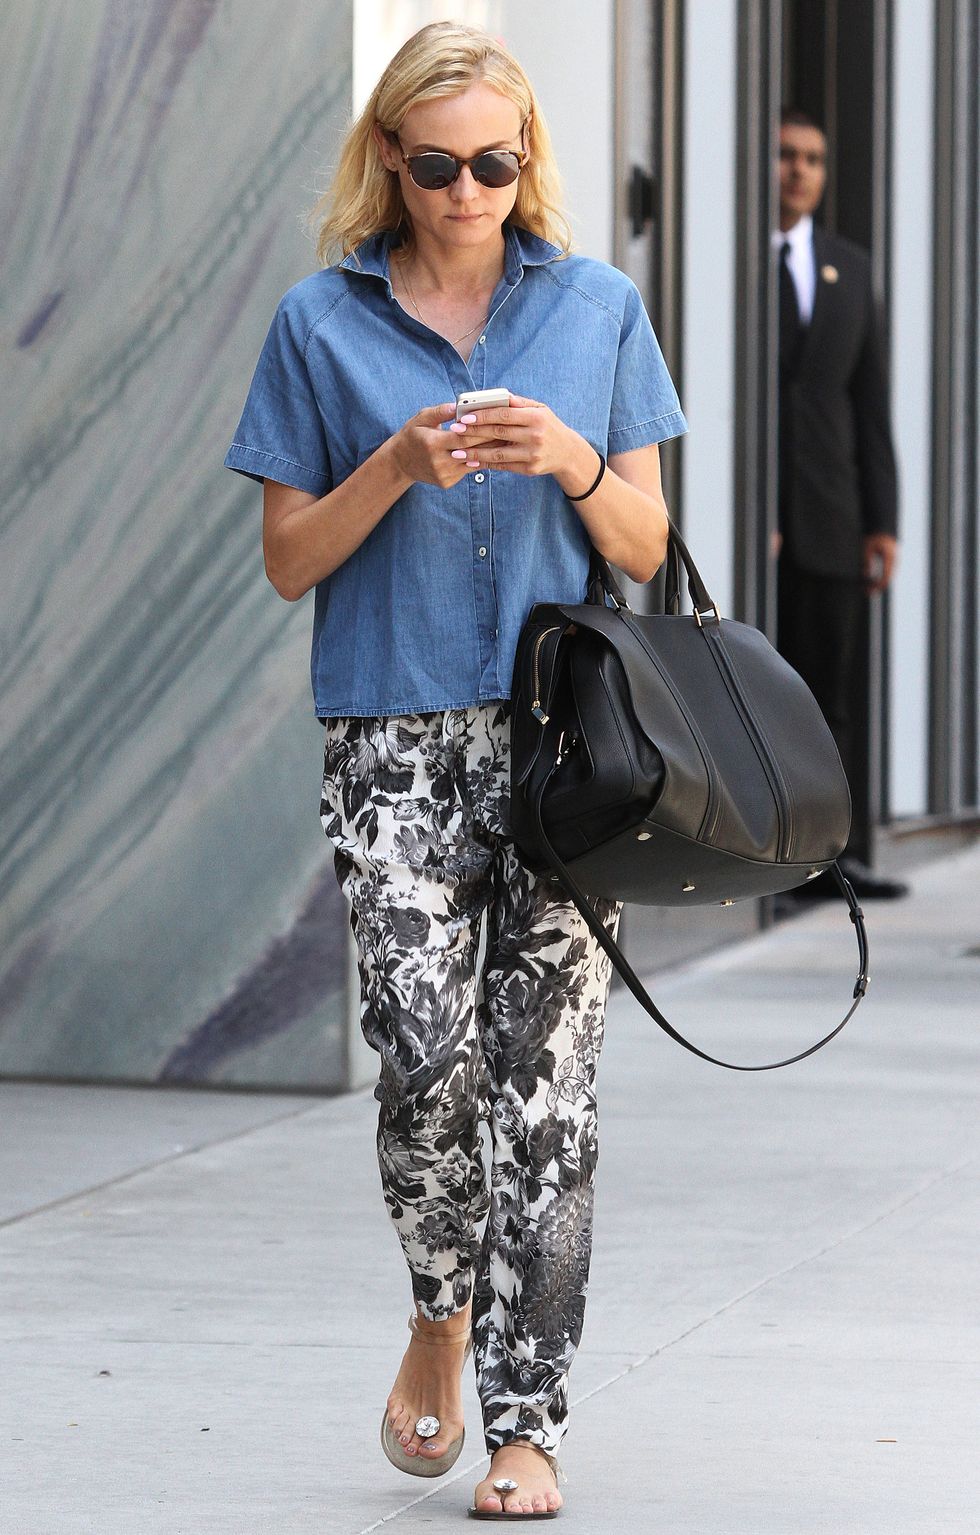 How to style a denim shirt like Diane Kruger - celebrity style photos - fashion - cosmopolitan.co.uk